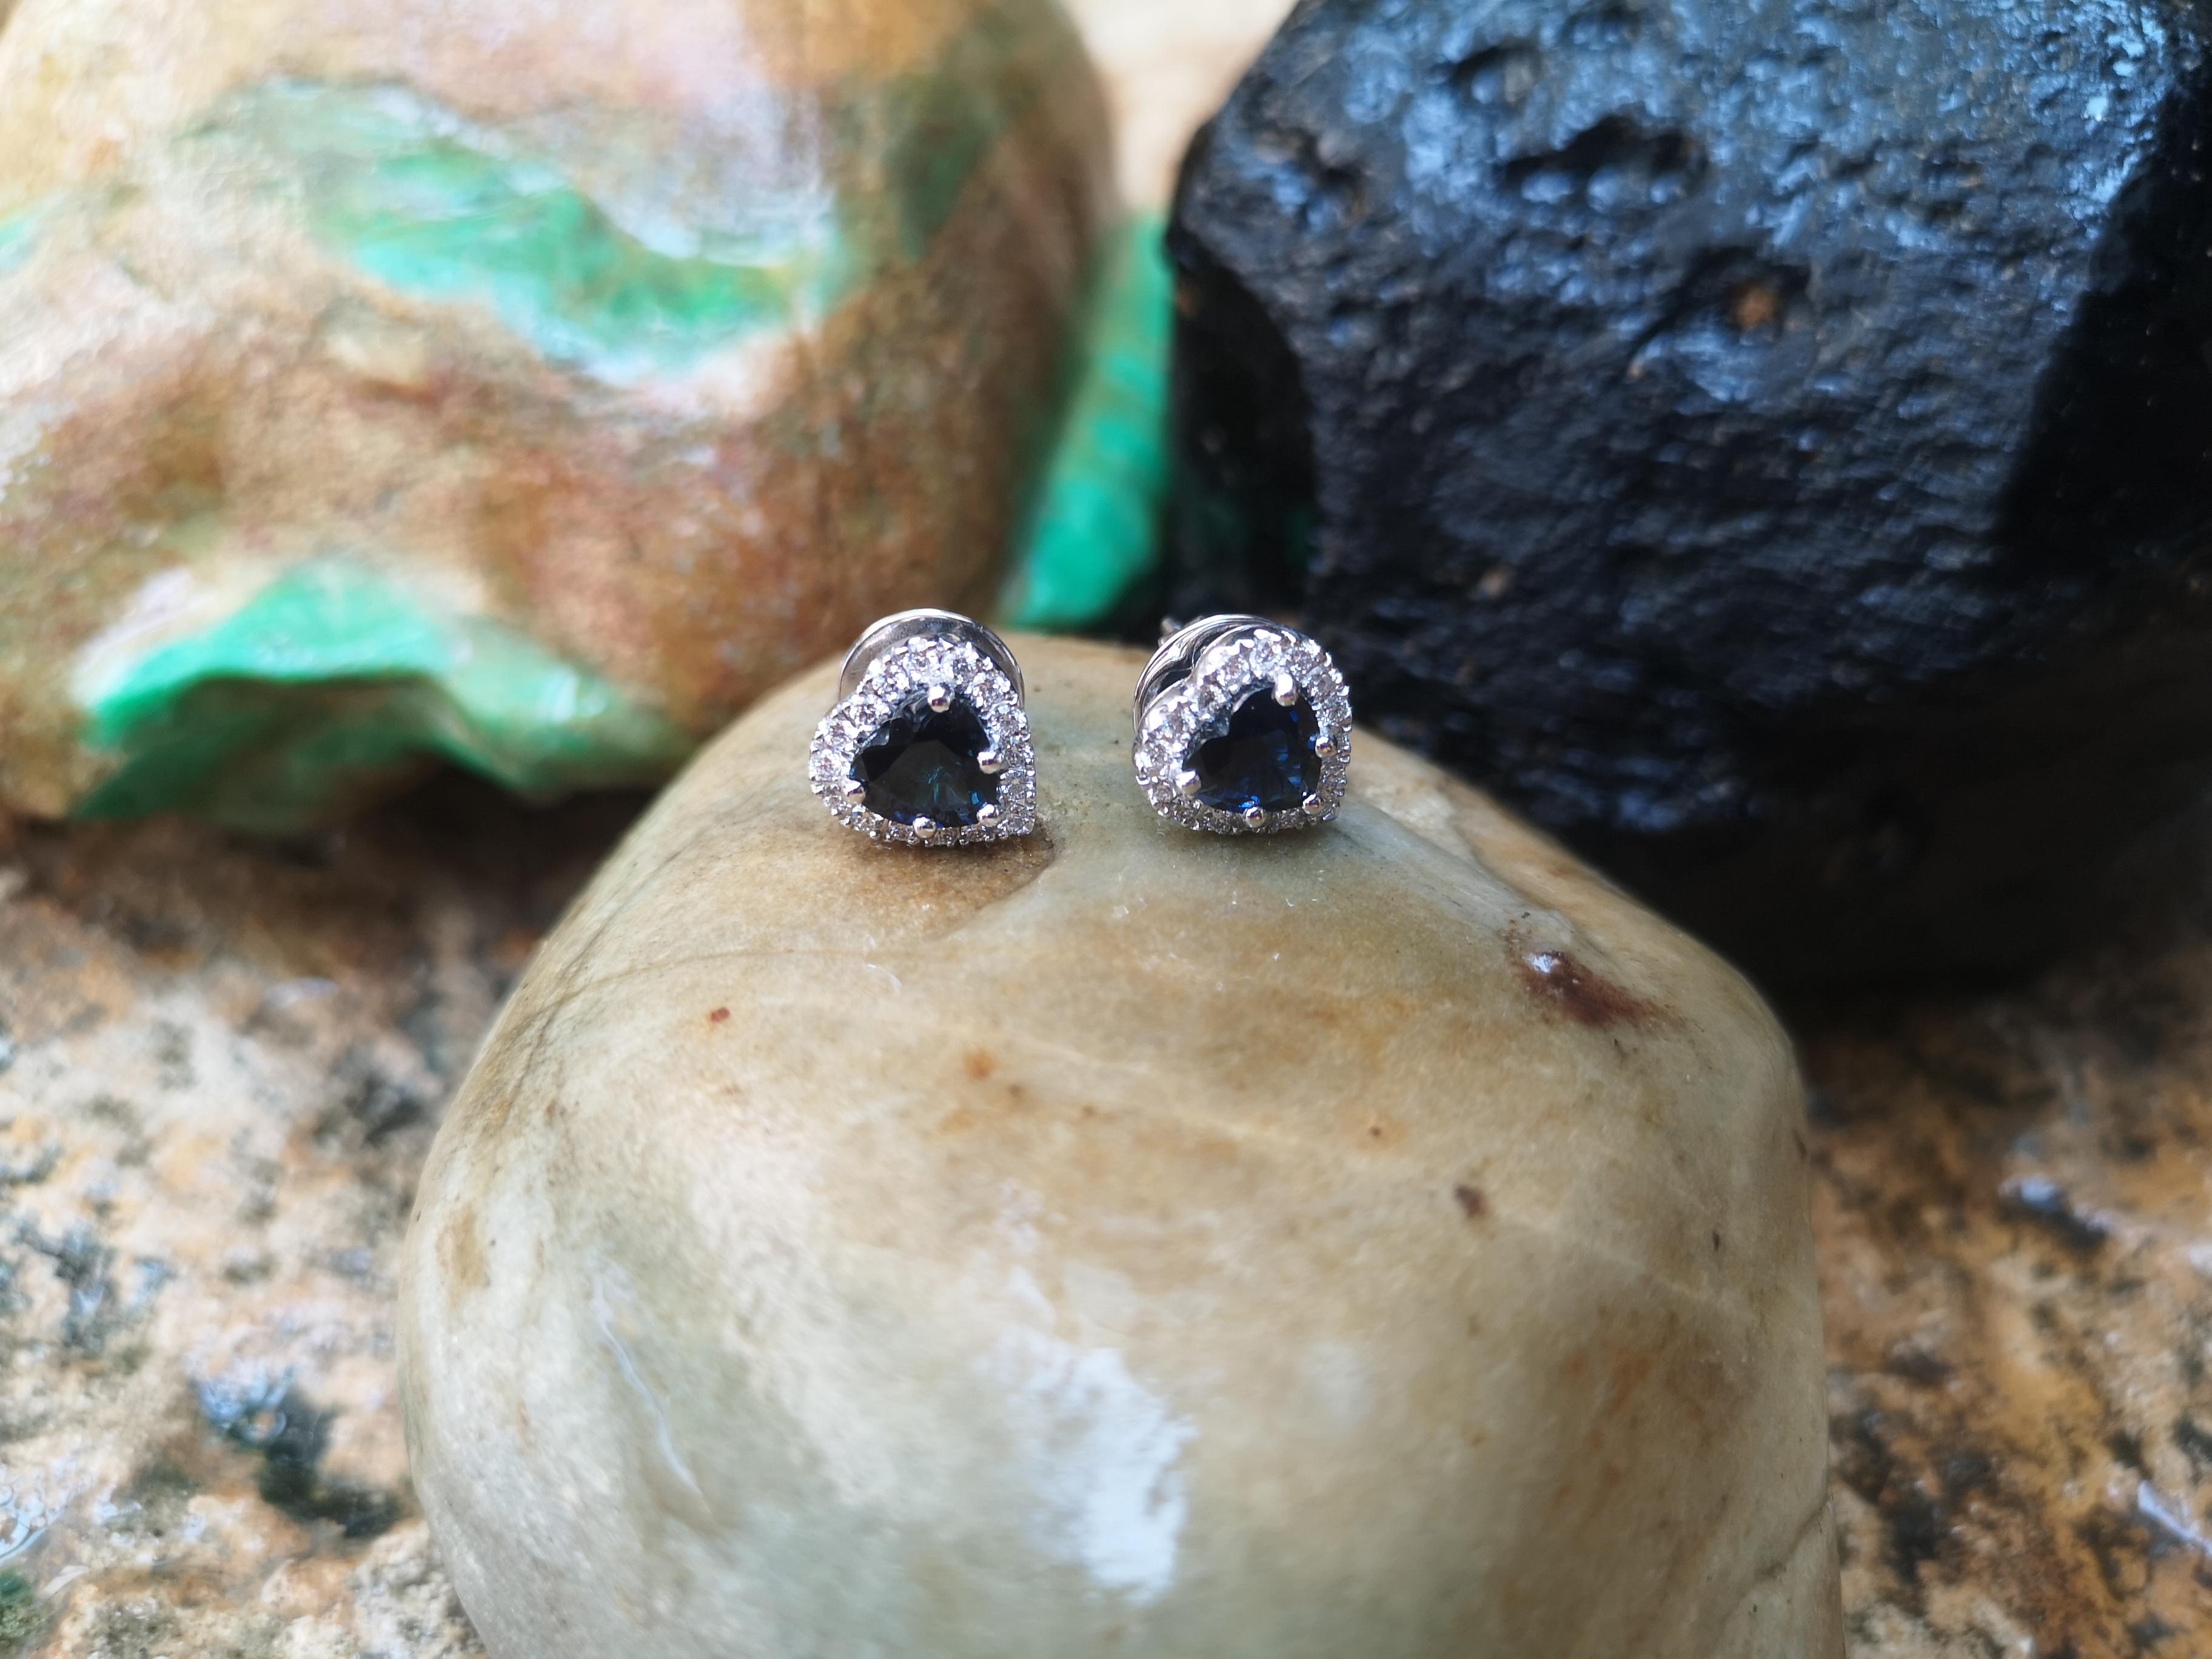 Blue Sapphire 3.33 carats with Diamond 0.41 carat Earrings set in 18 Karat White Gold Settings

Width: 1.1 cm
Length: 1.1 cm 

